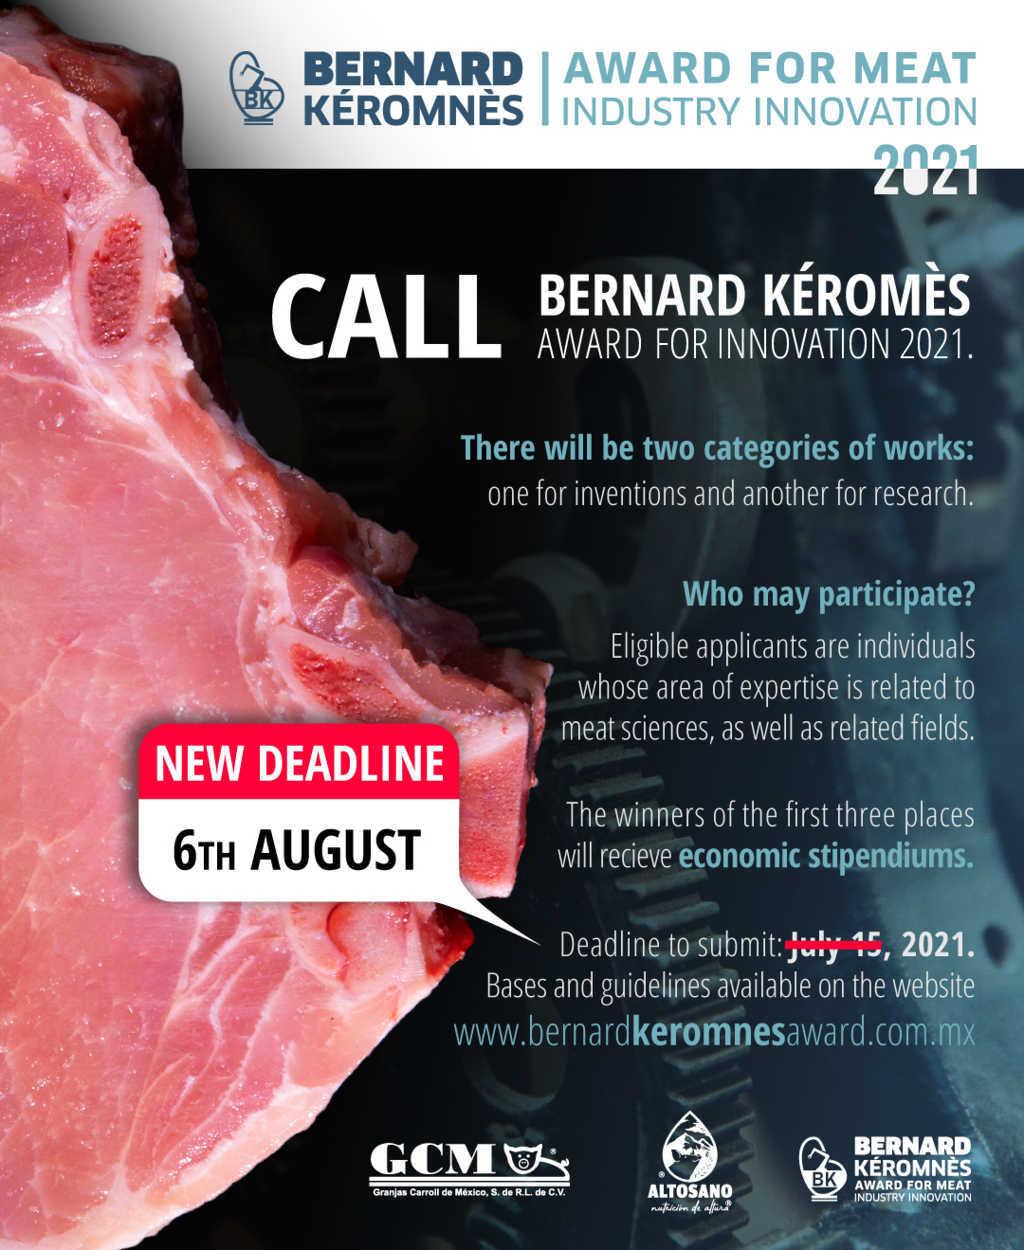 Se amplia fecha para participar en el “Premio A La Innovacion Bernard Kéromnès”